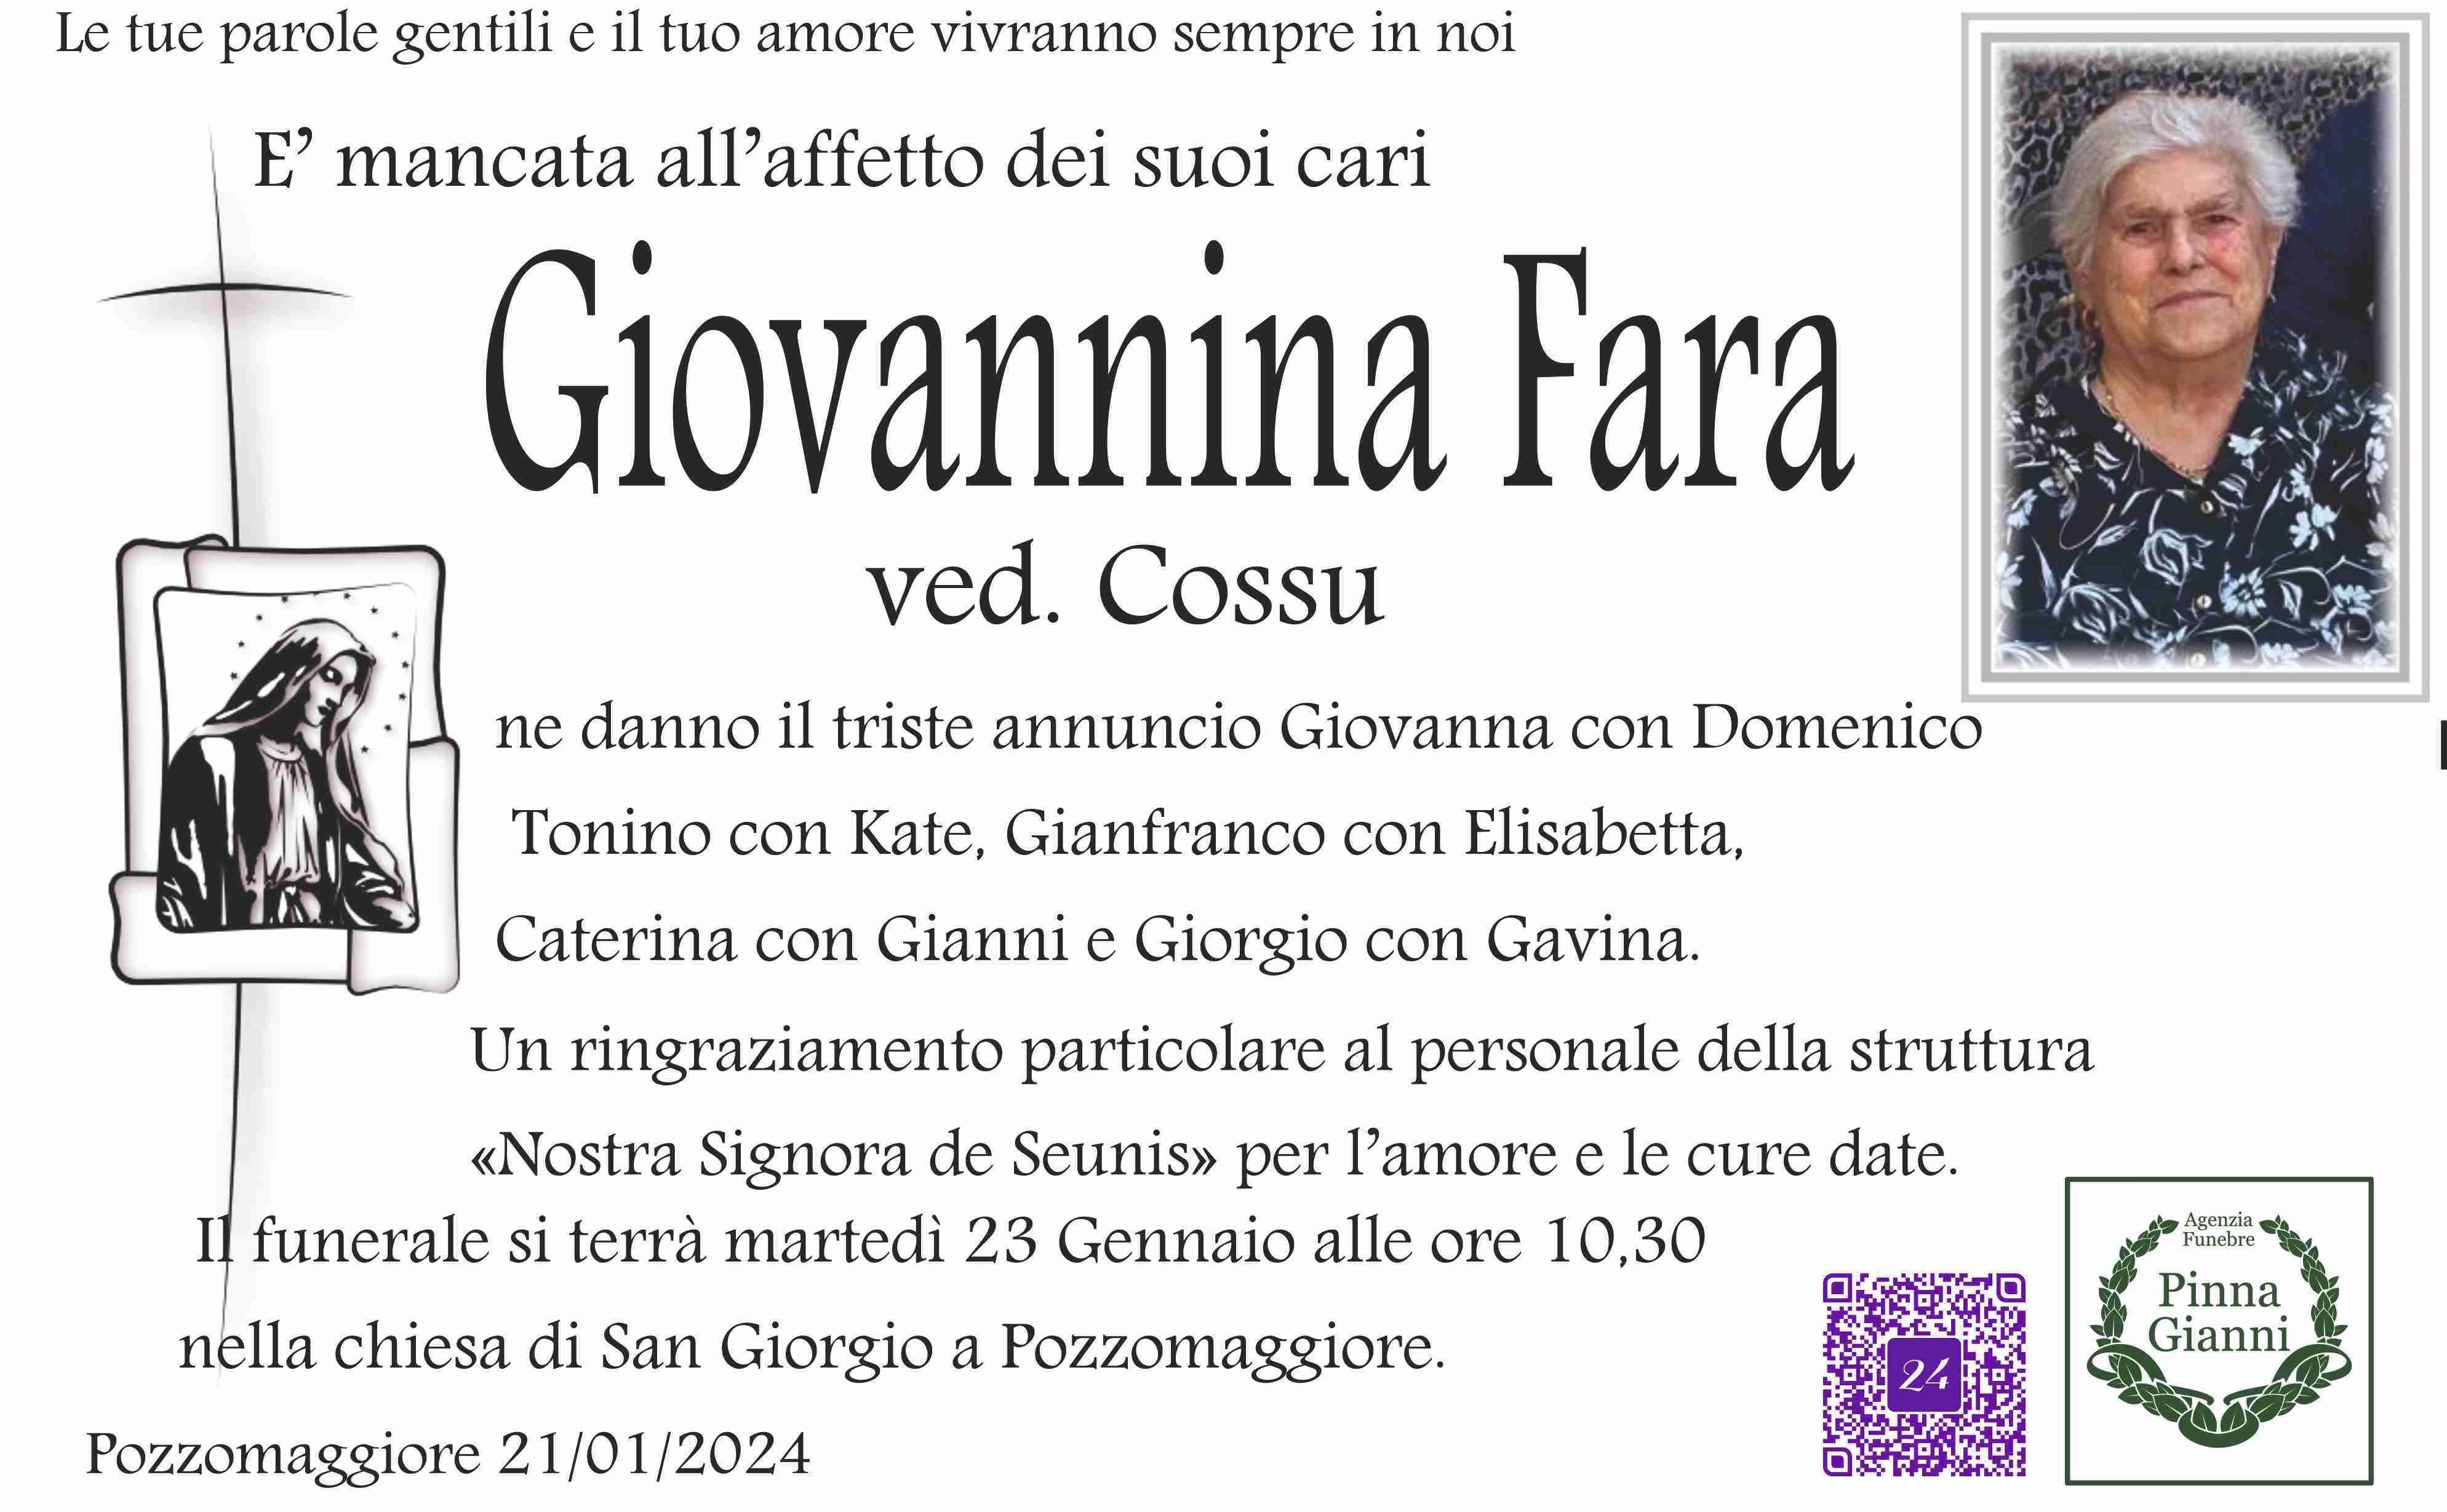 Giovannina Fara